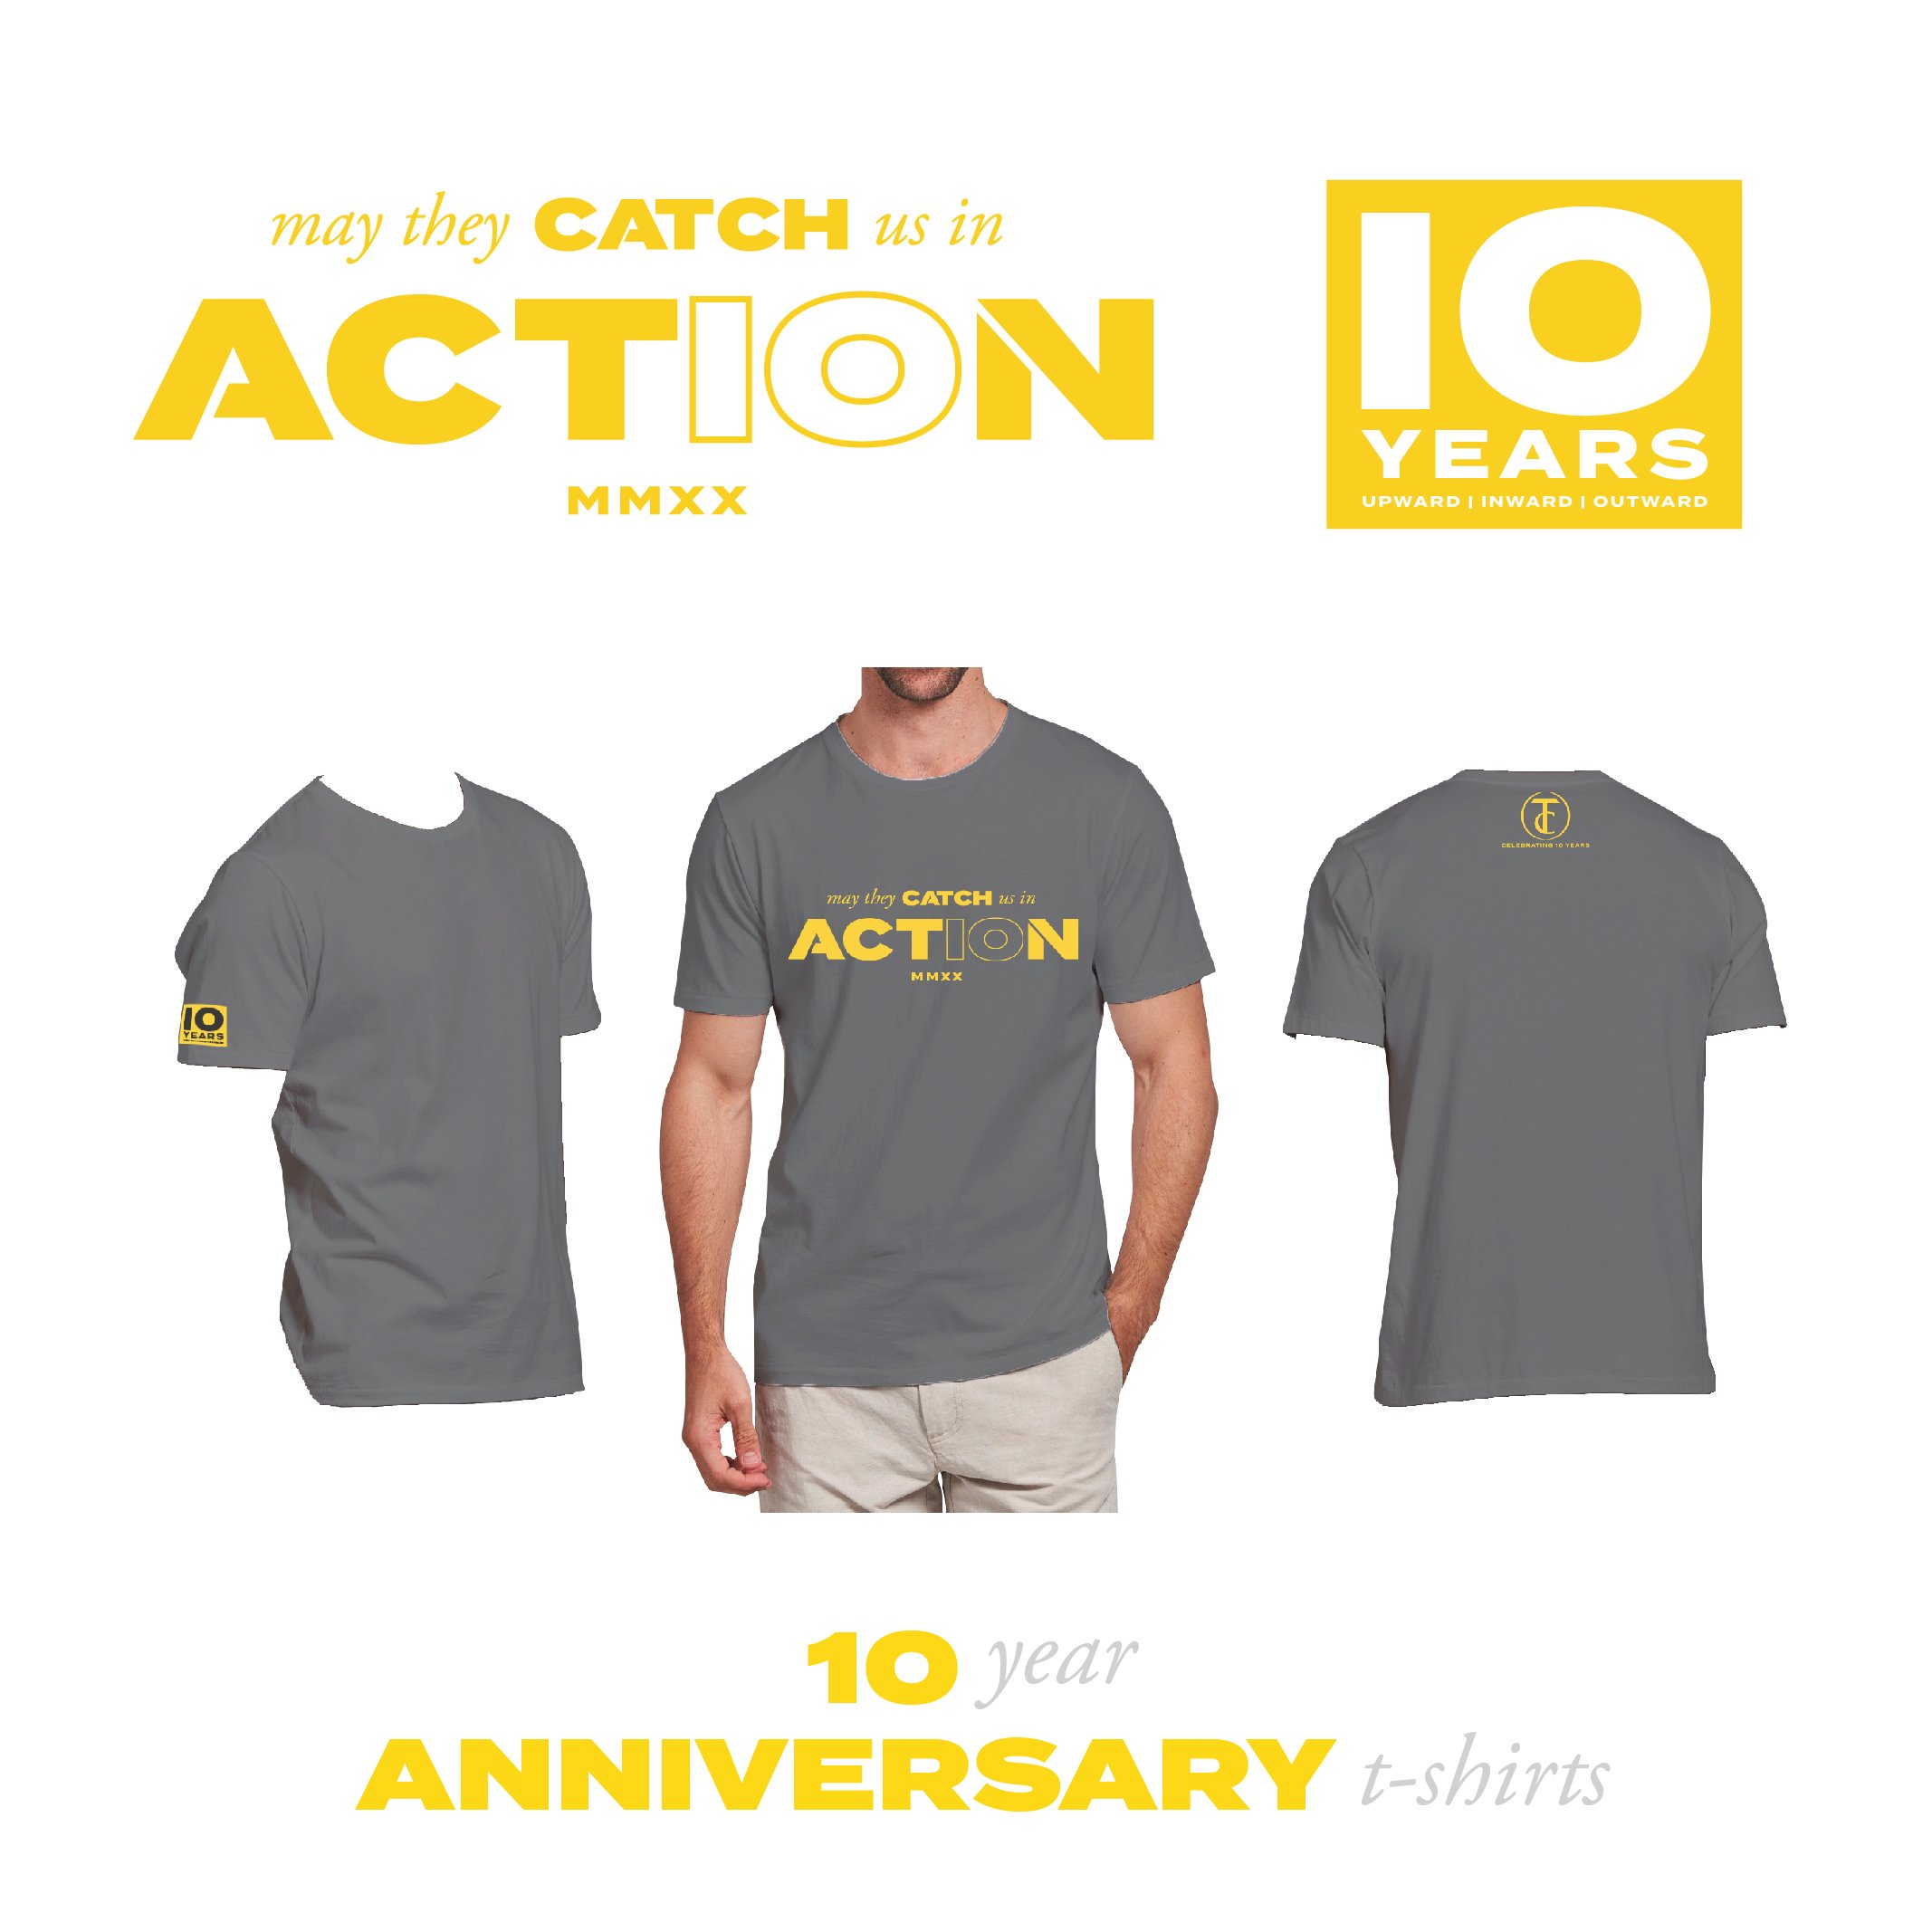 Action_10 year_Tshirt mockup-01.jpg